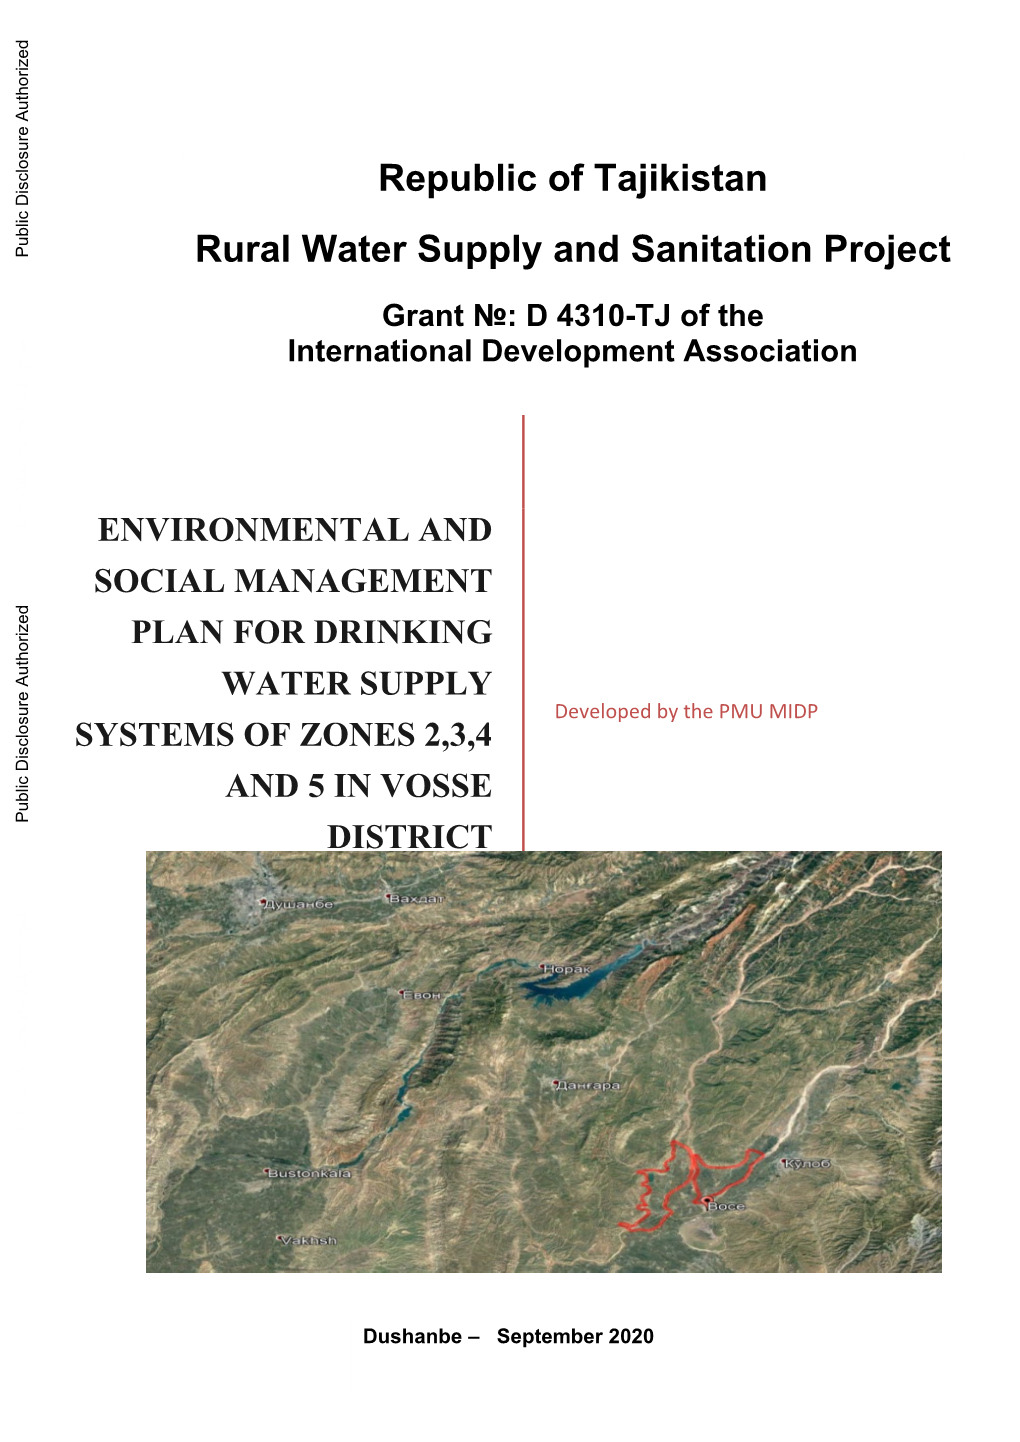 Republic of Tajikistan Rural Water Supply and Sanitation Project